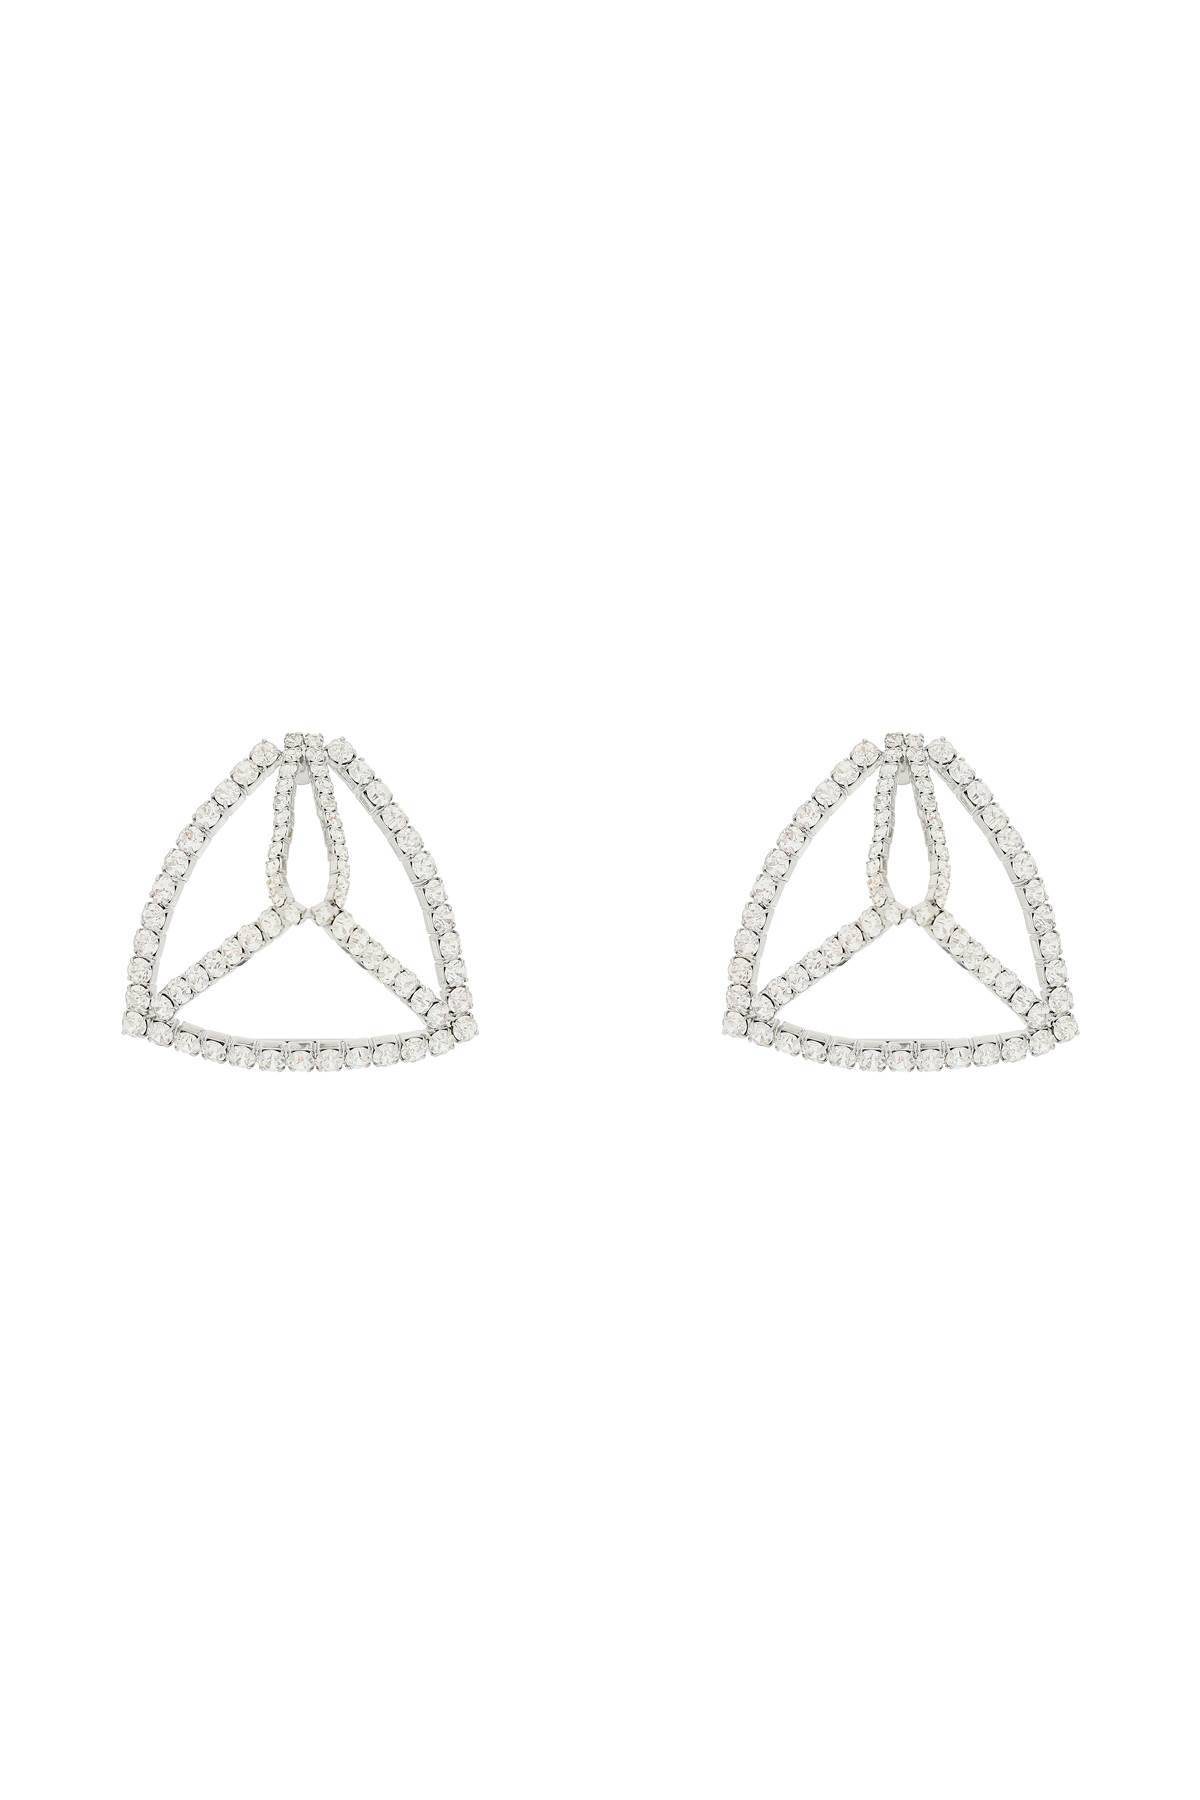 AREA AREA 'crystal pyramid' earrings